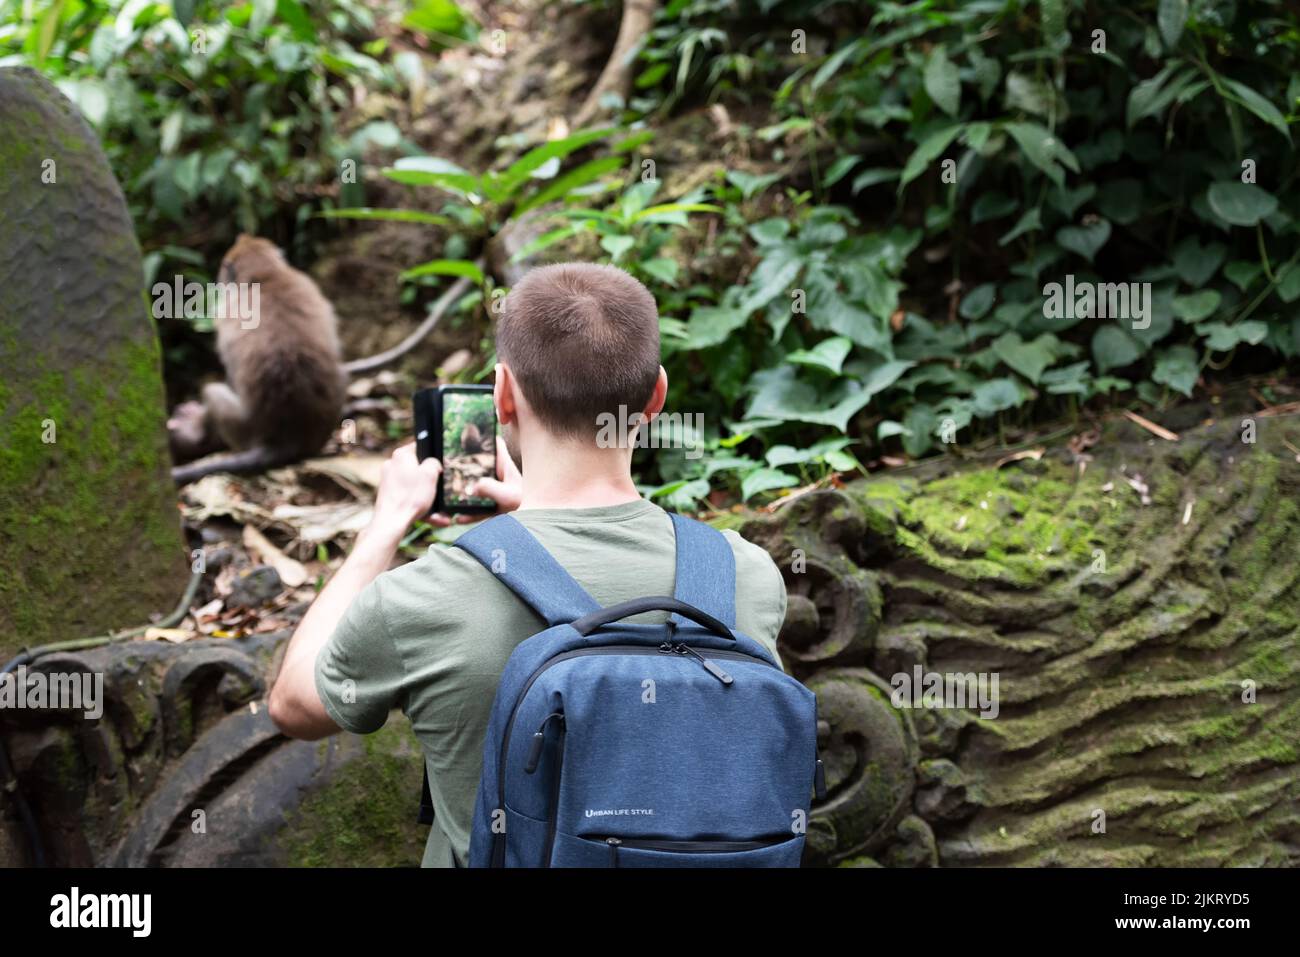 Bali, Indonesia - April 04, 2019: Man taking photo of monkey with smart phone in Ubud Monkey Forest. Stock Photo